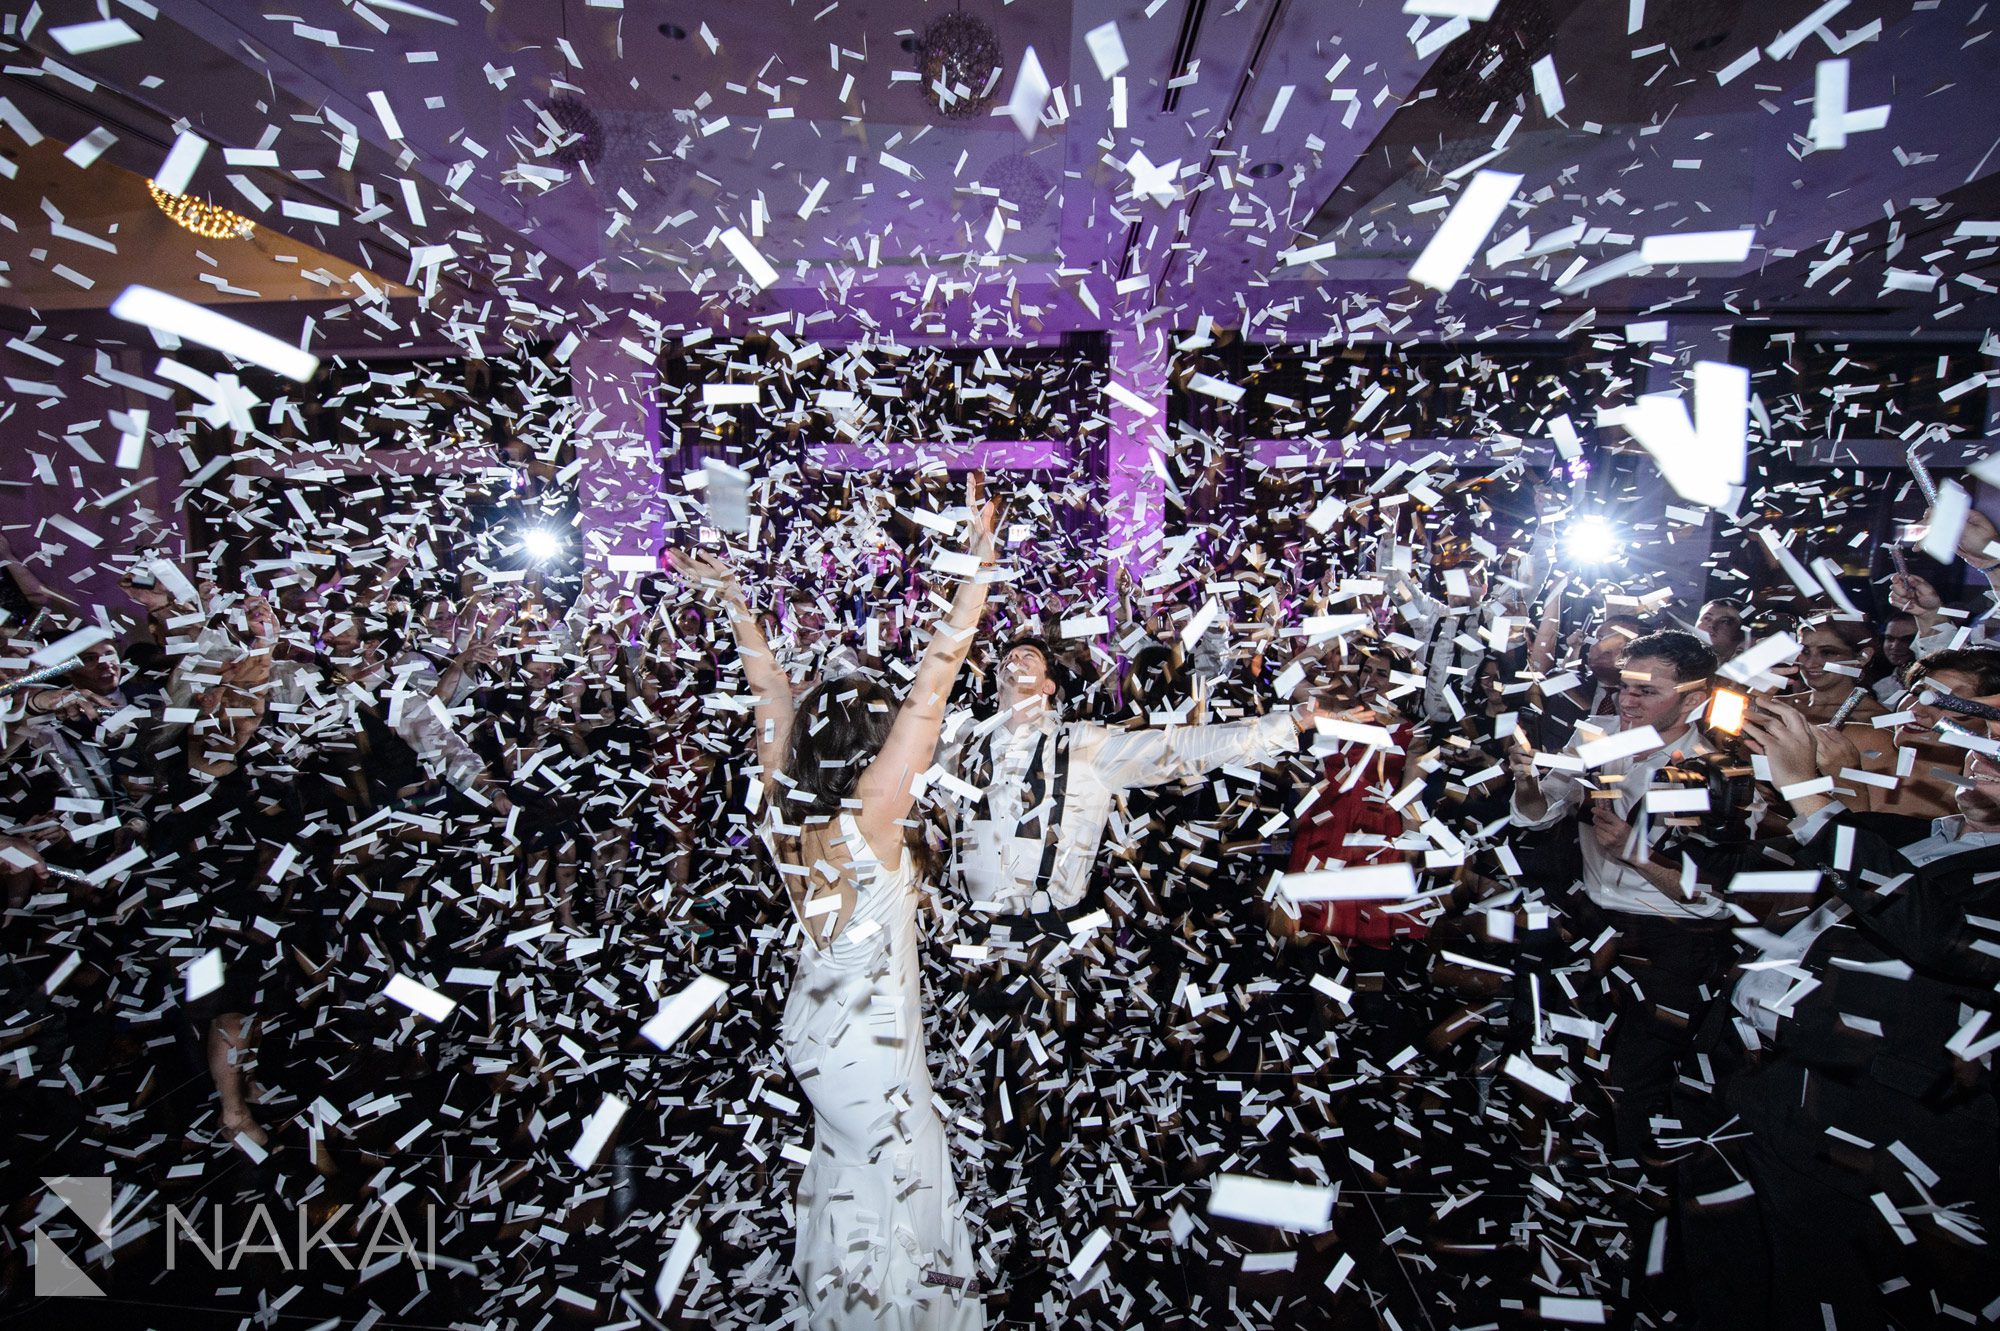 chicago radisson blu wedding photo dancing reception confetti